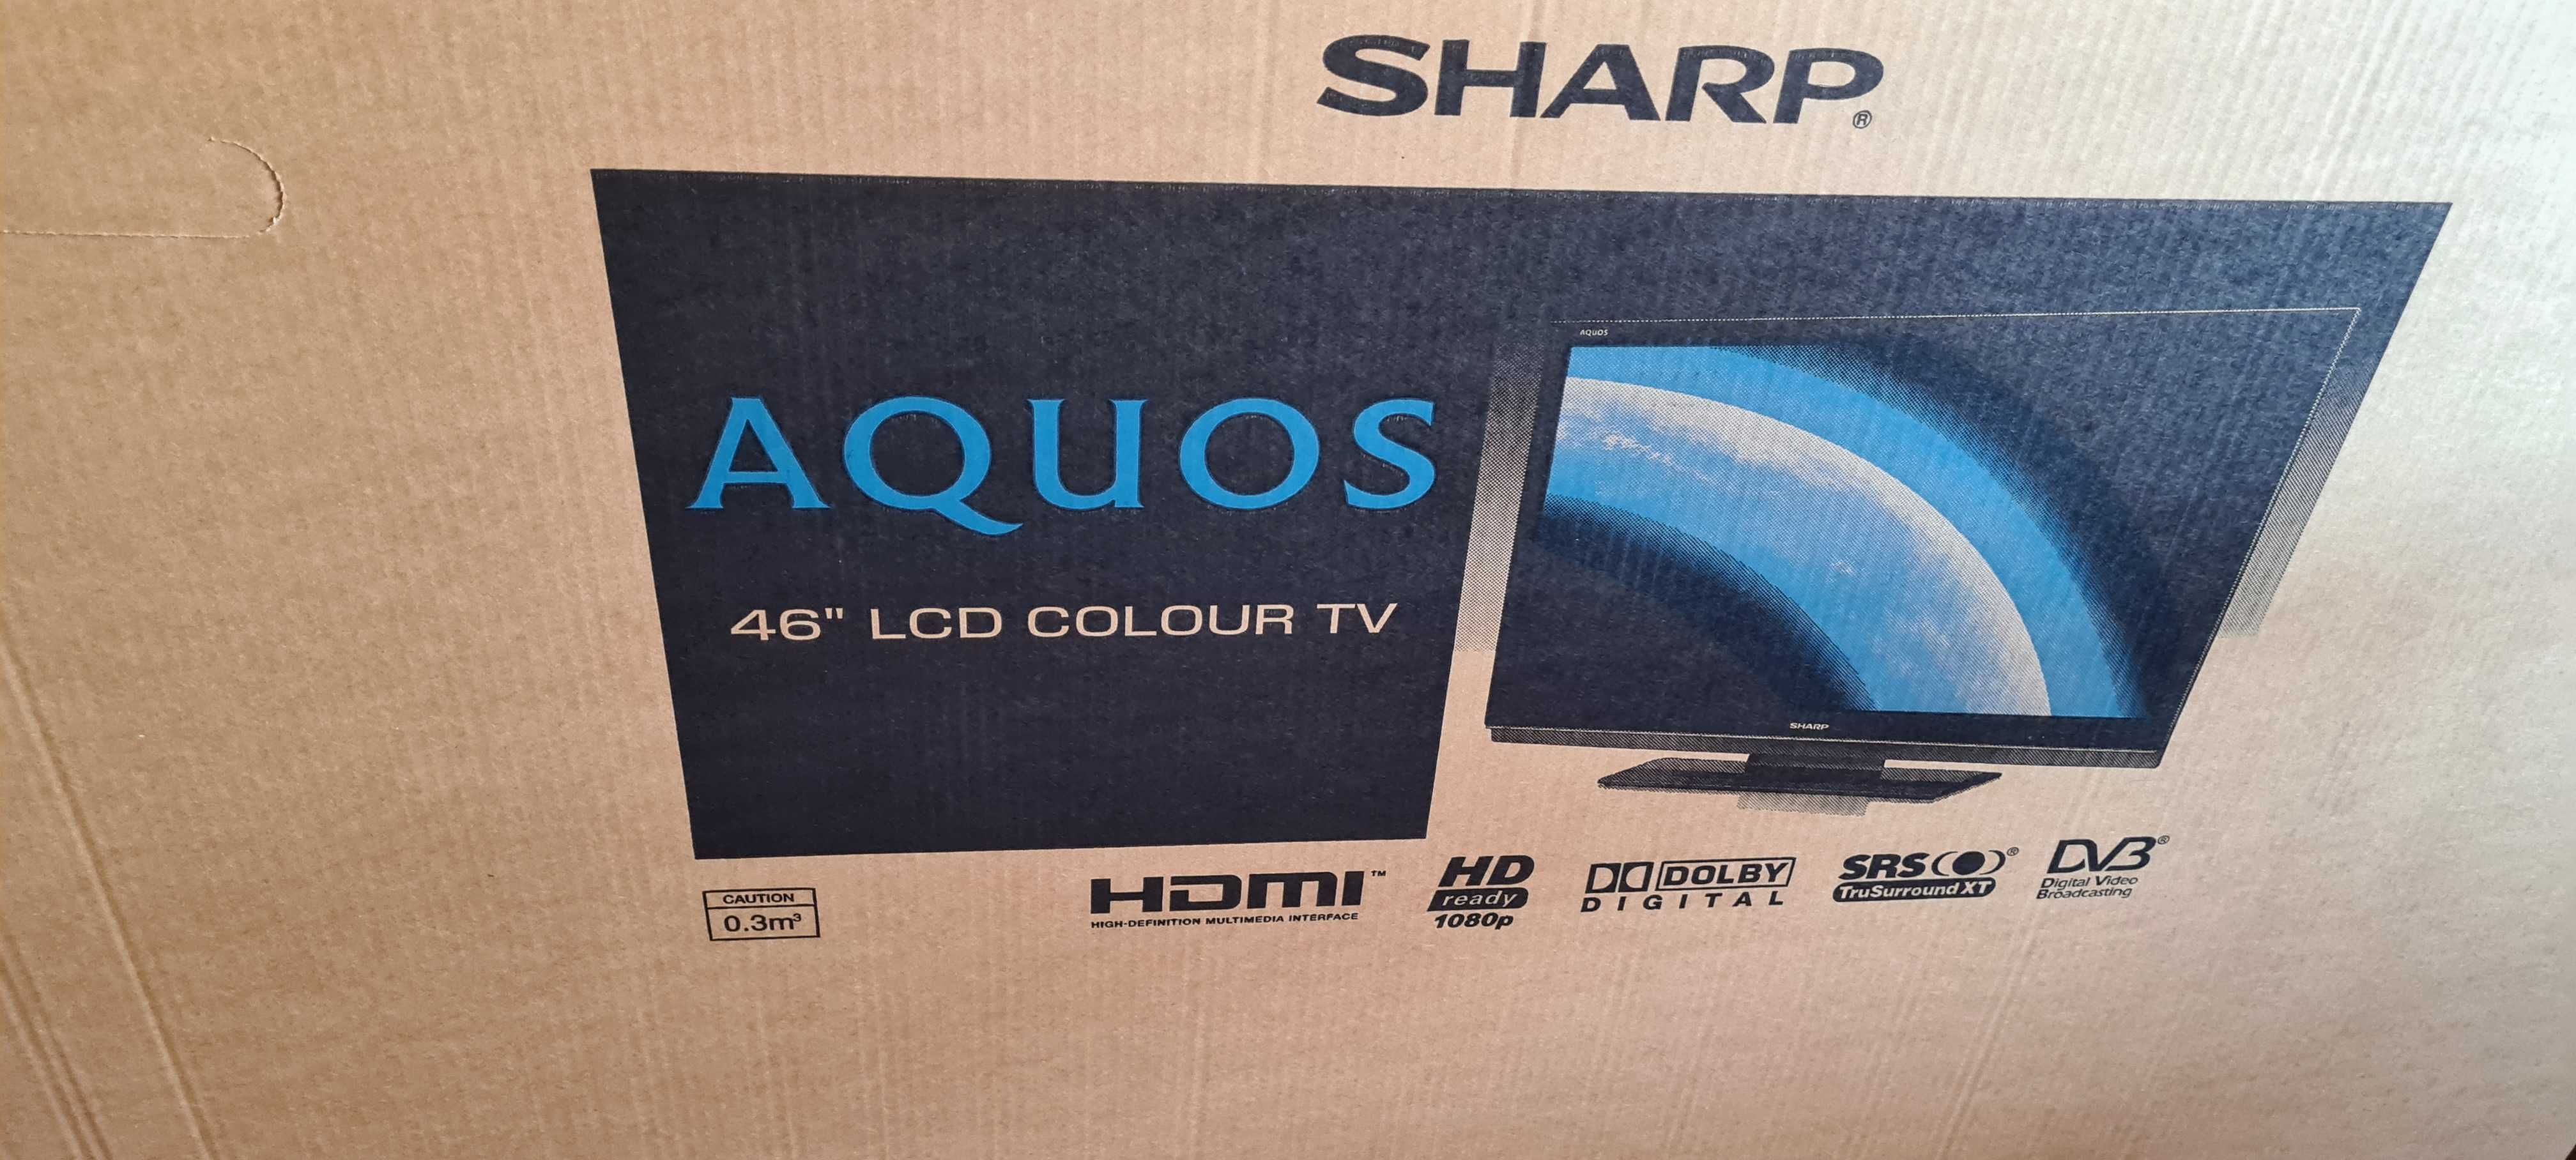 TV SHARP aquos nowy